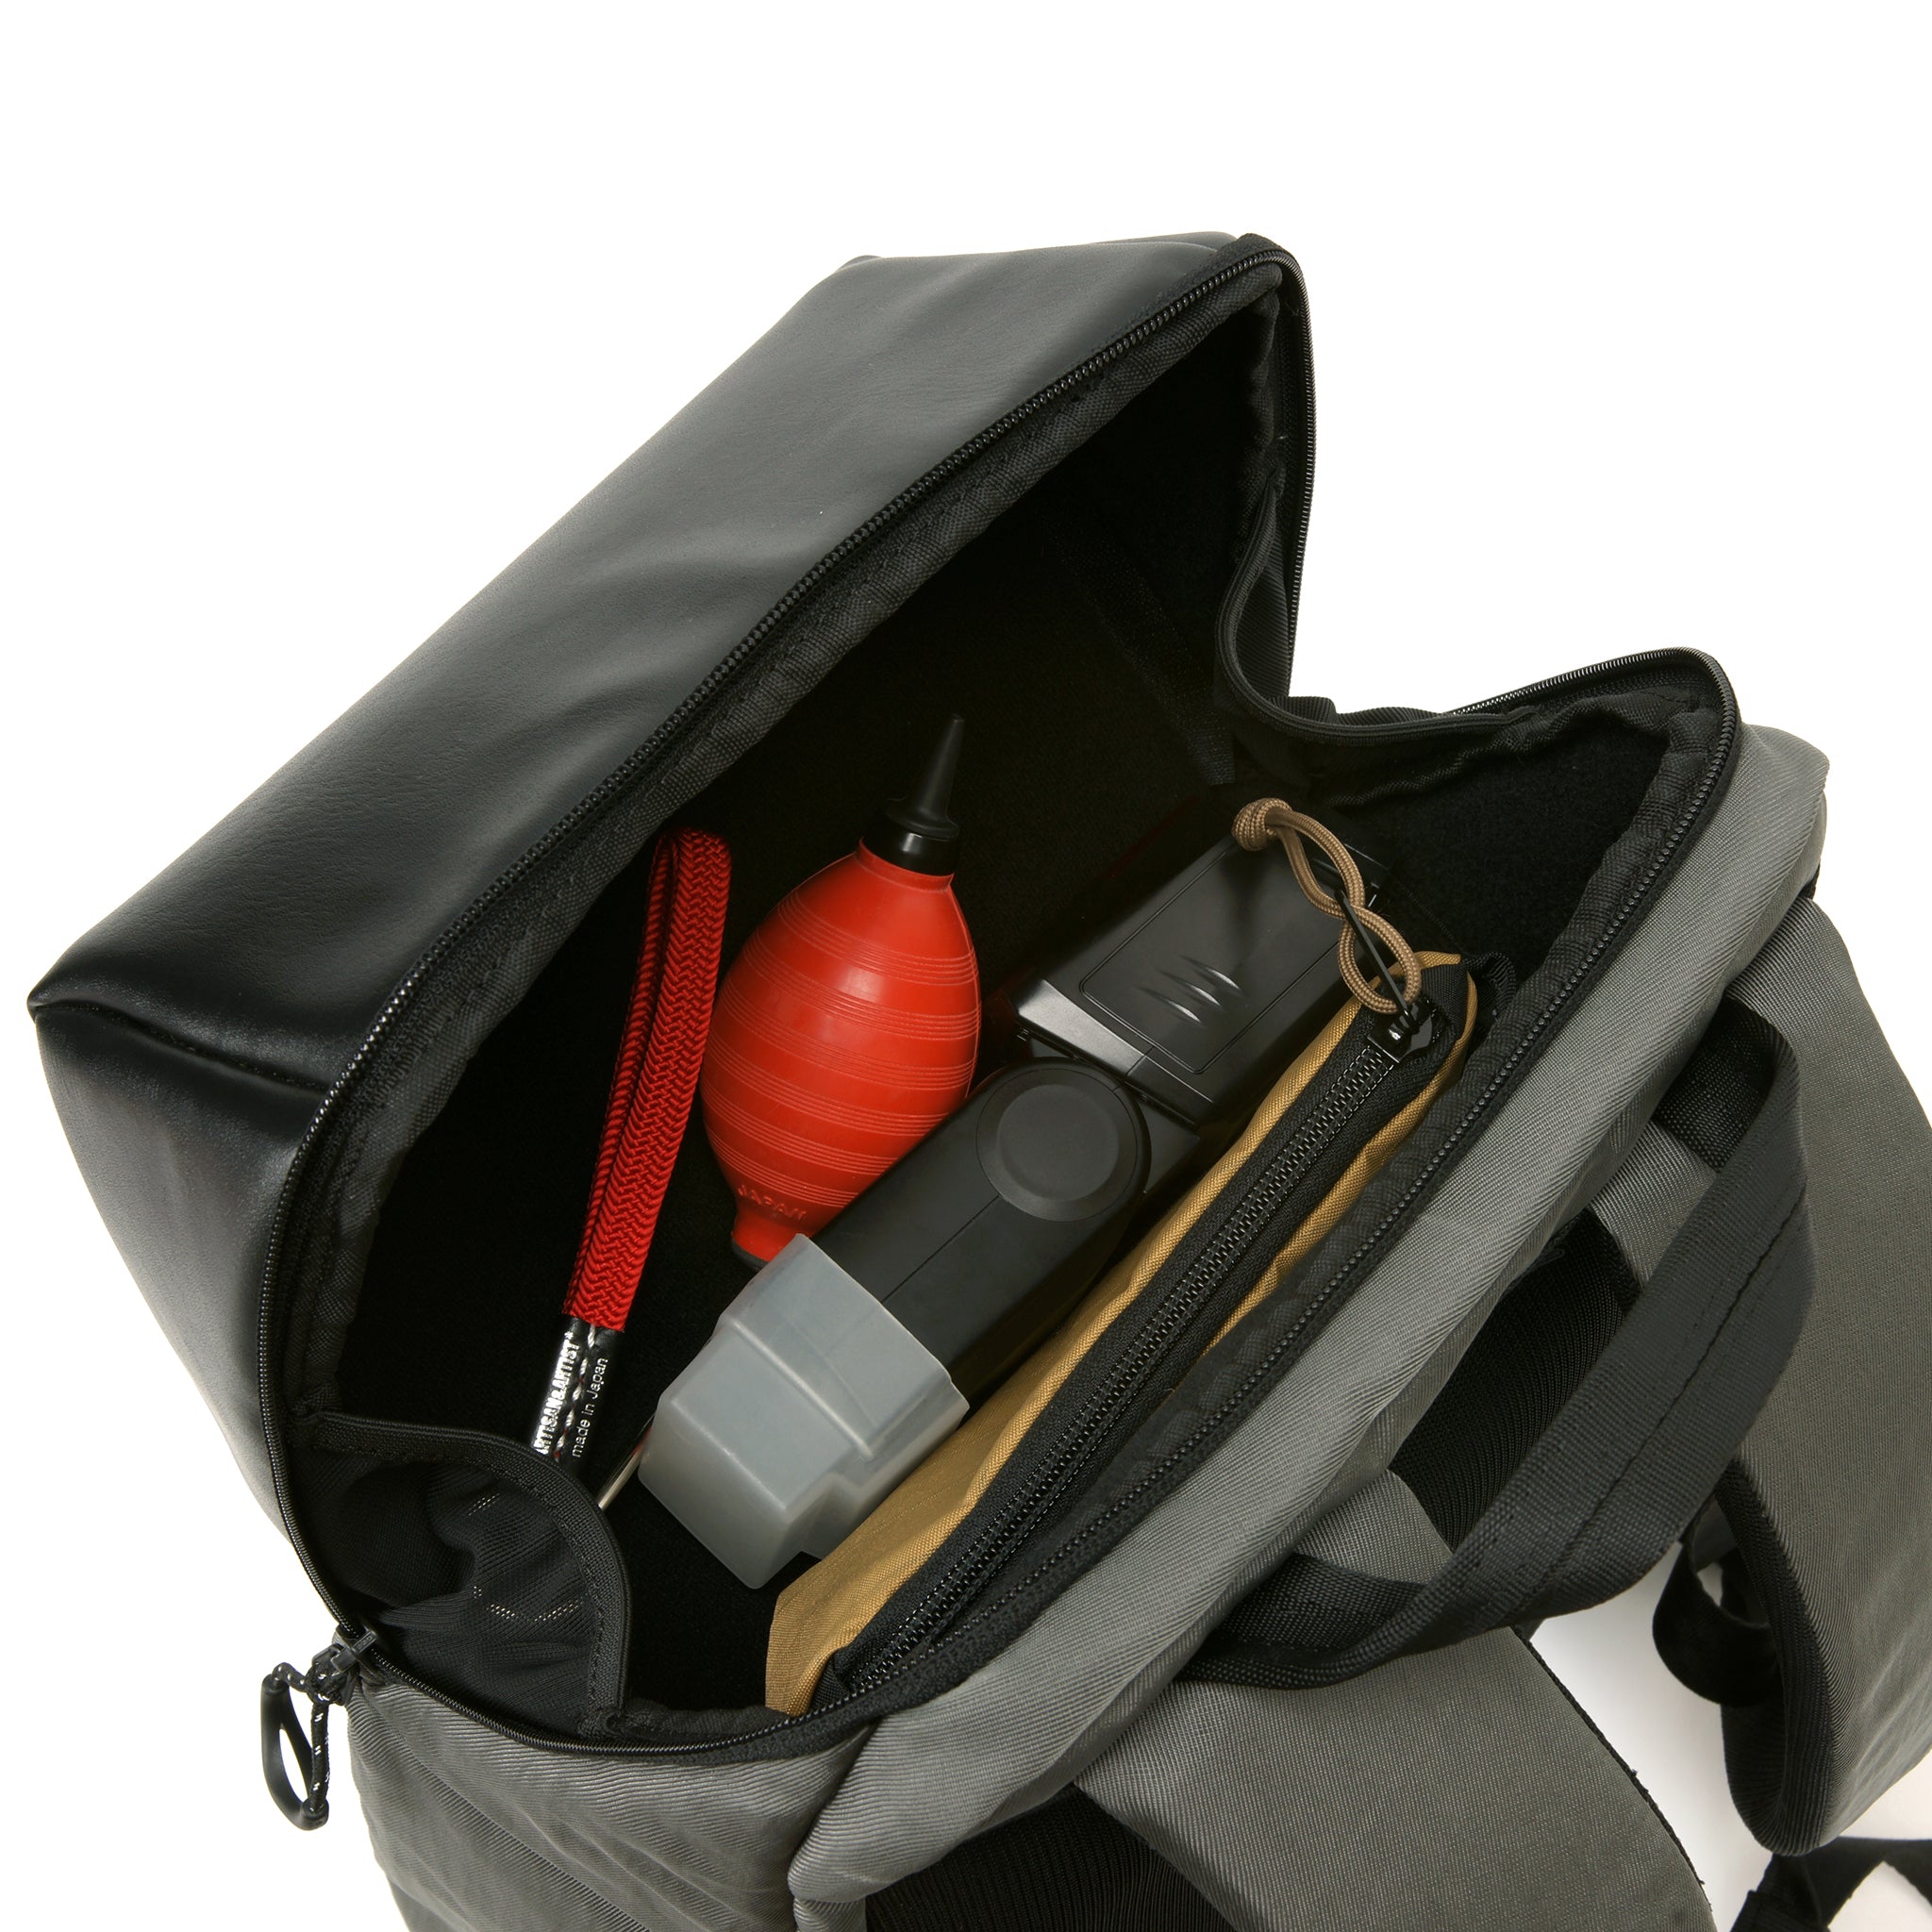 ACAM-BS0001 Basalt Backpack